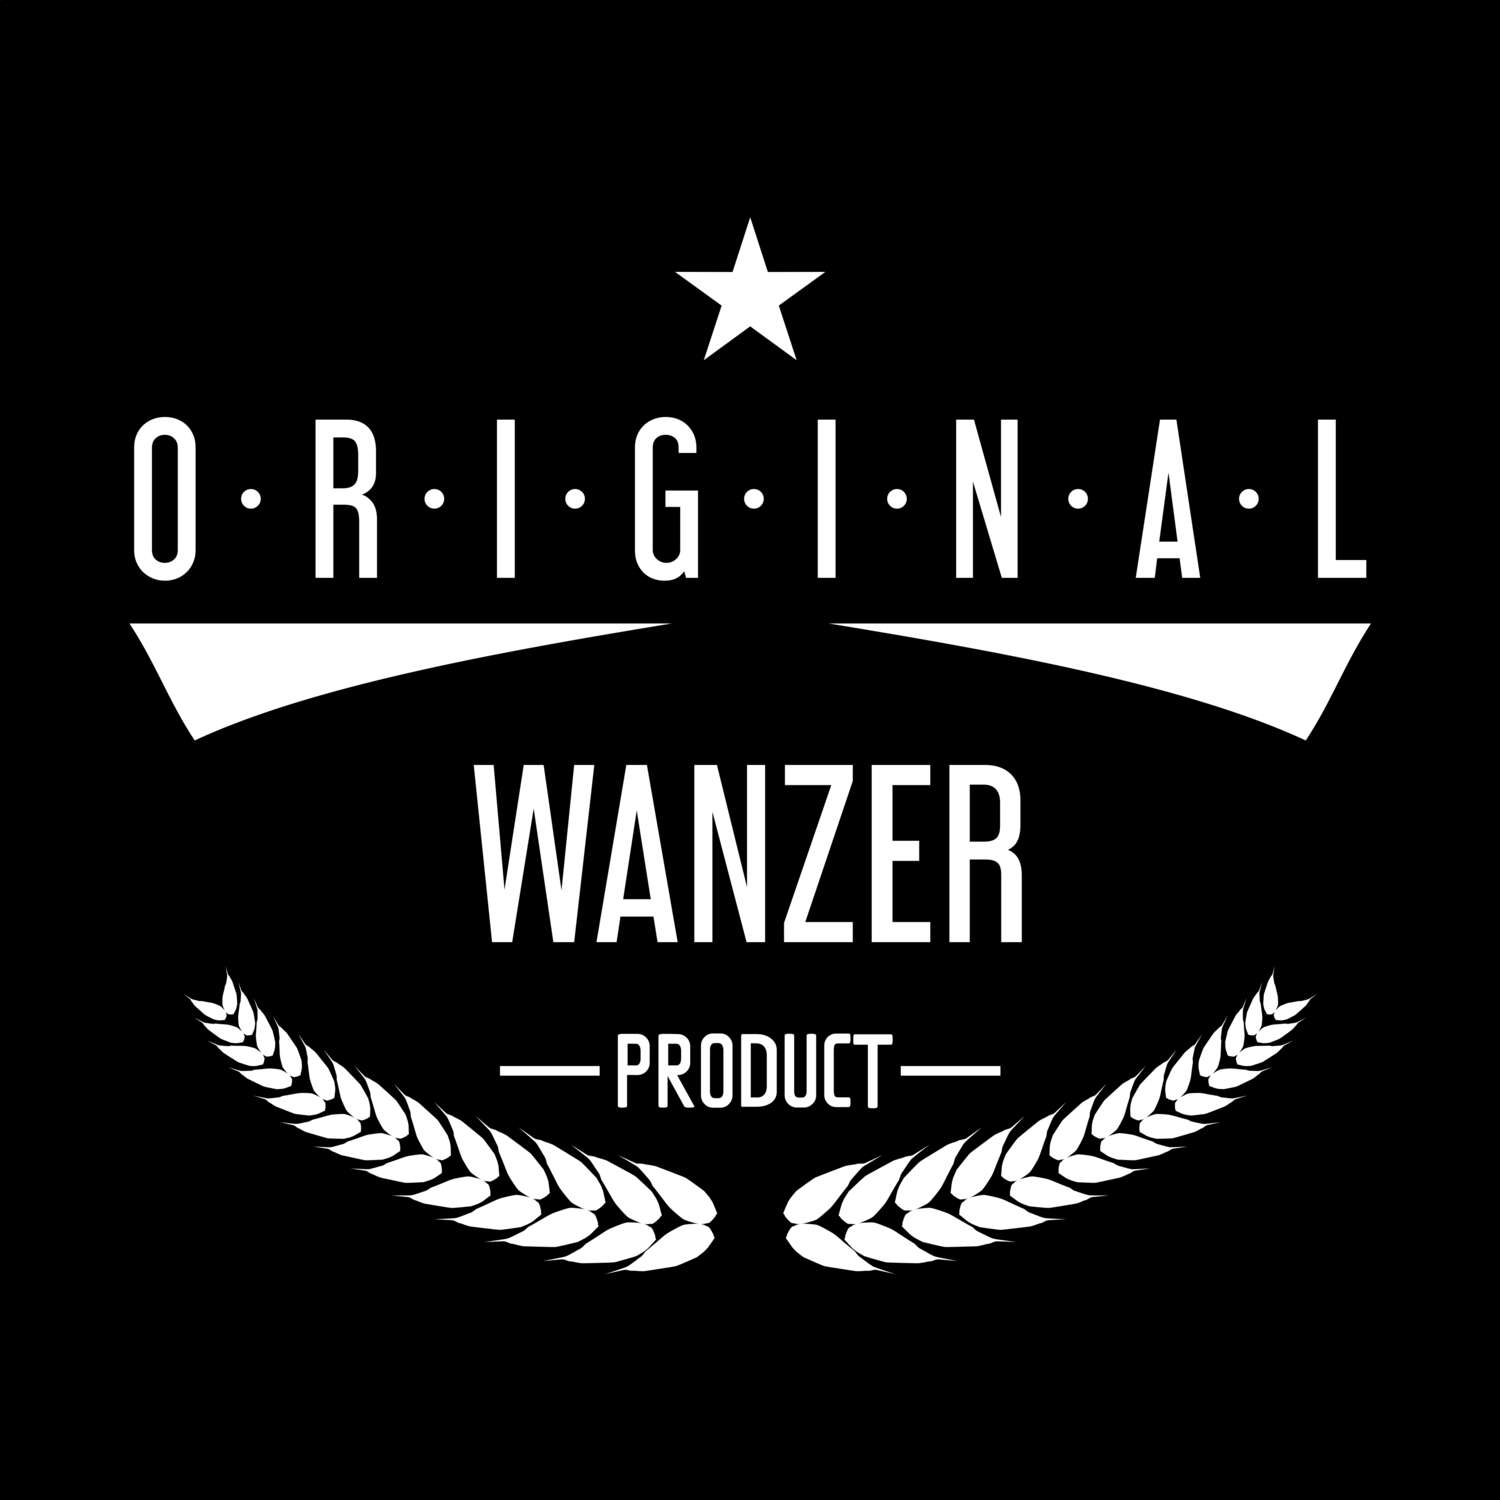 Wanzer T-Shirt »Original Product«